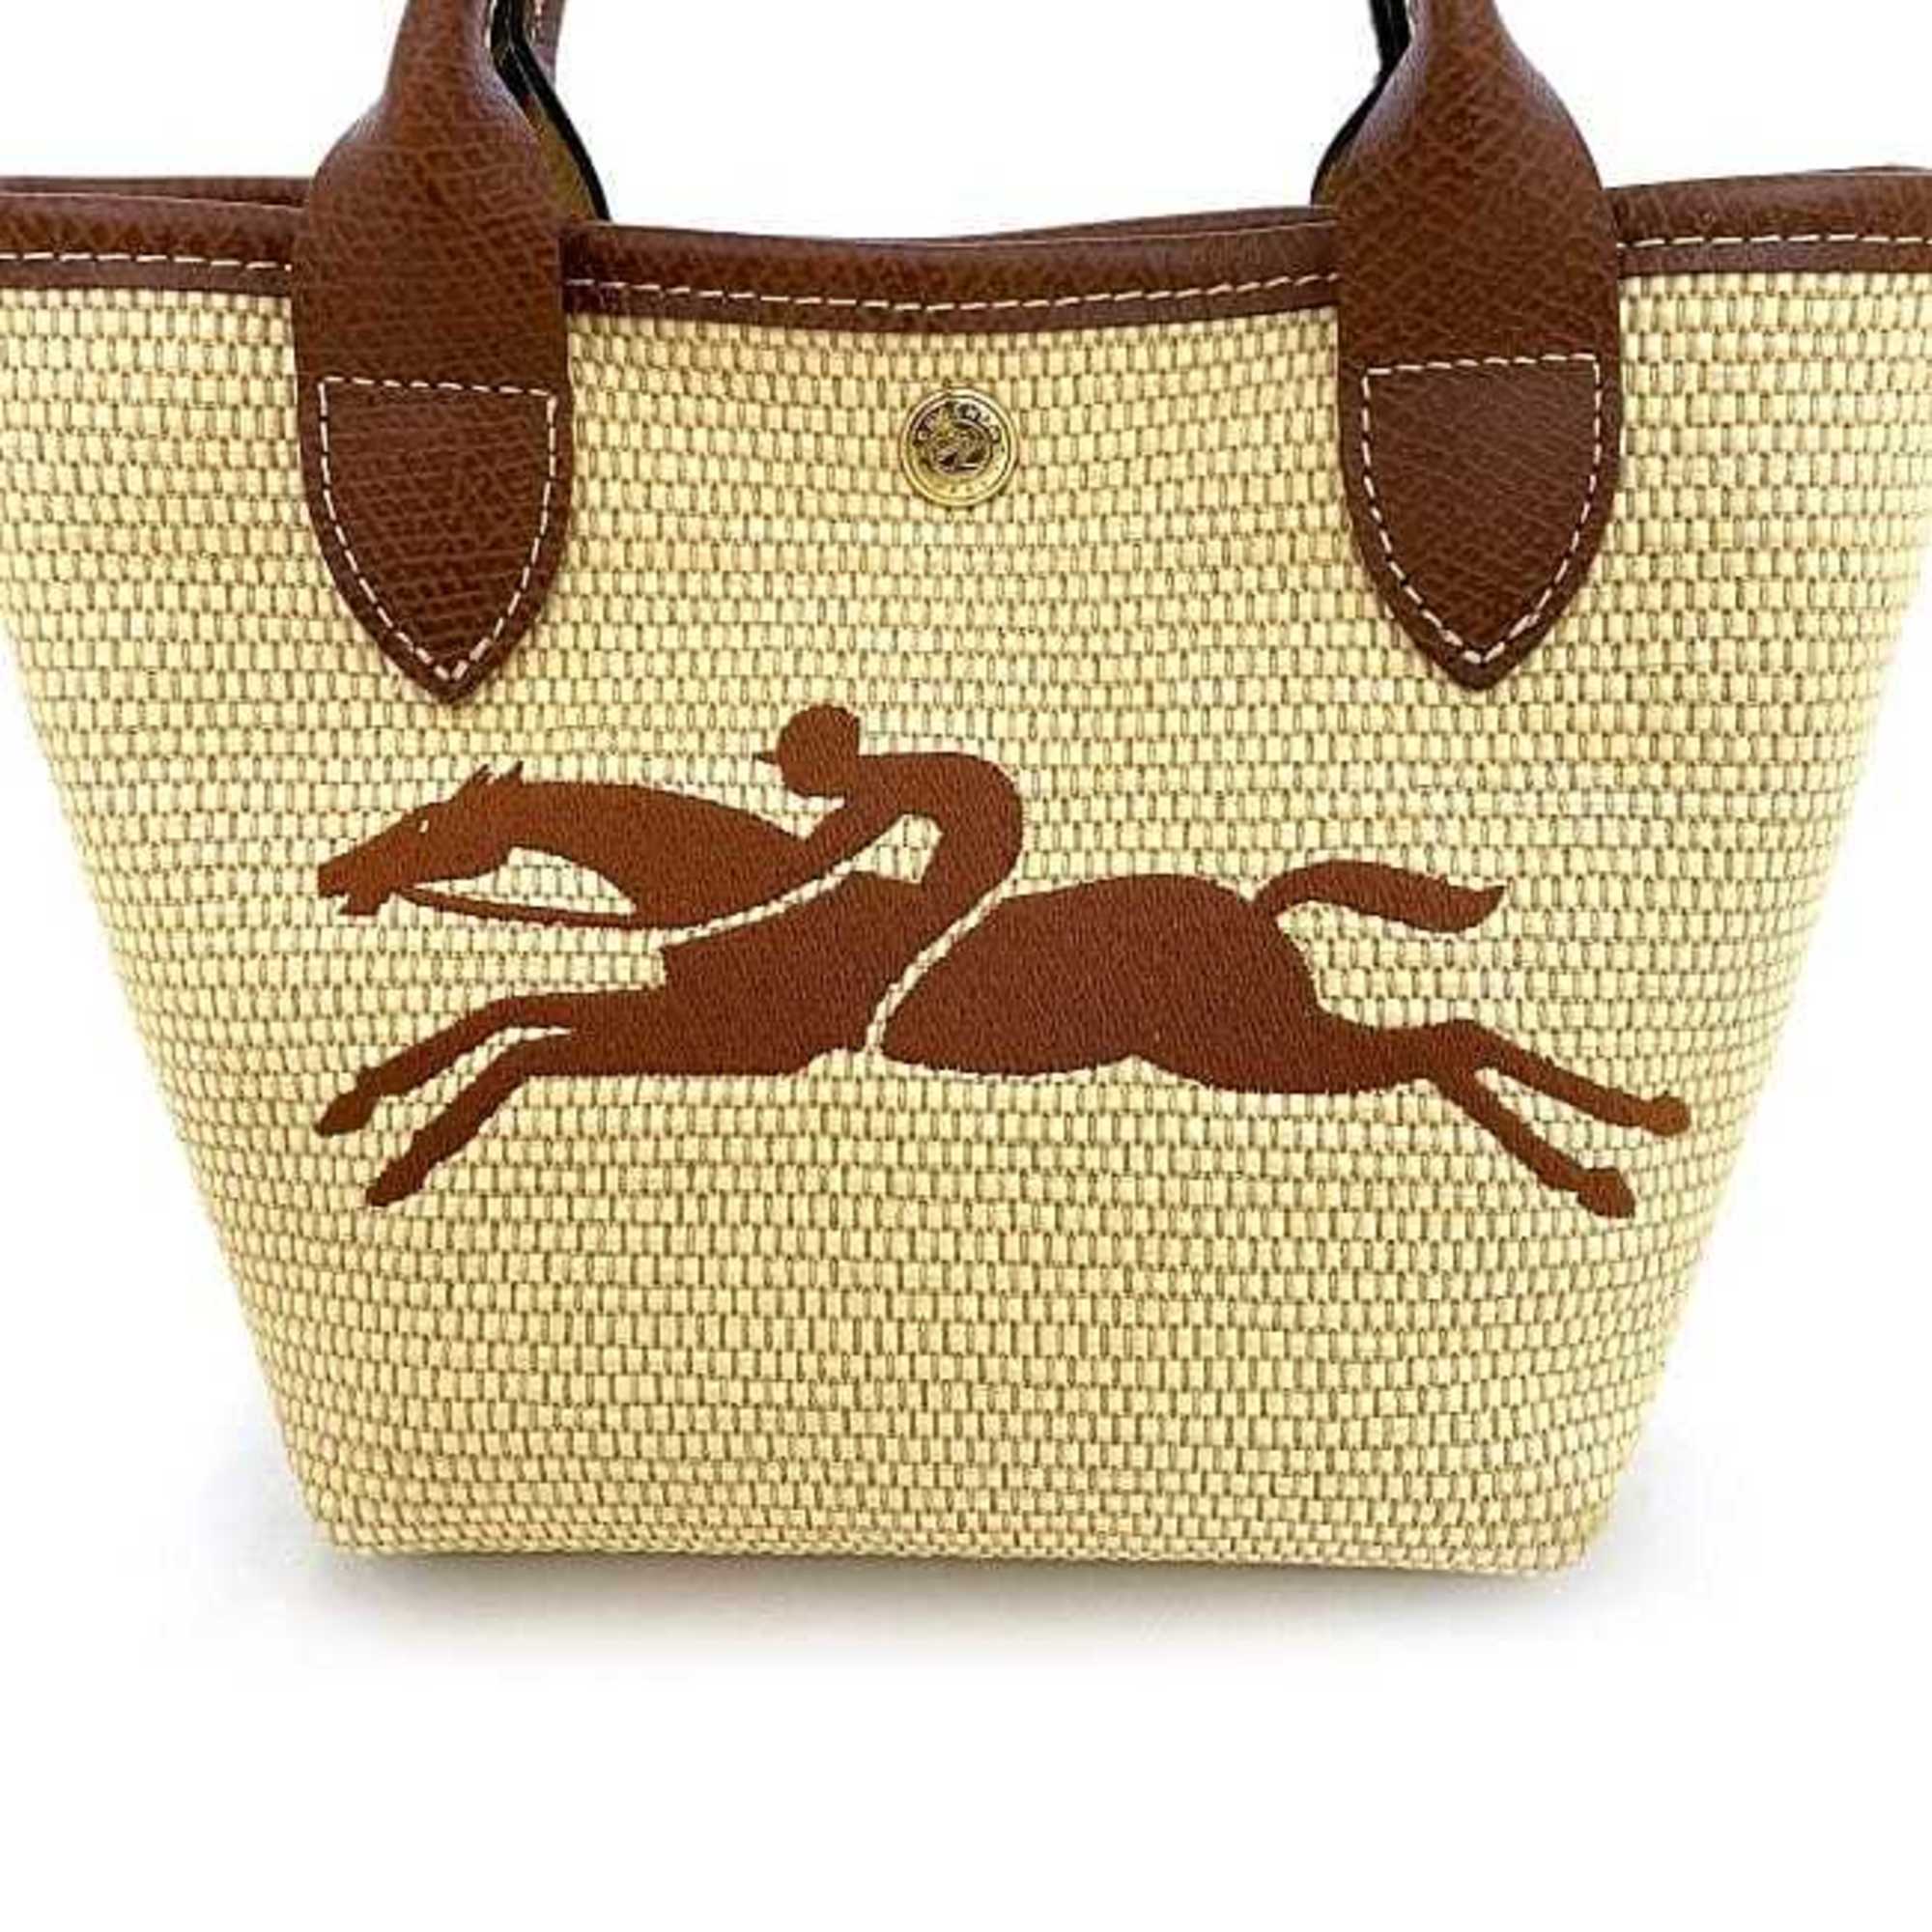 Longchamp 2-way bag beige brown 10162 f-20620 straw leather LONGCHAMP shoulder compact ladies horse